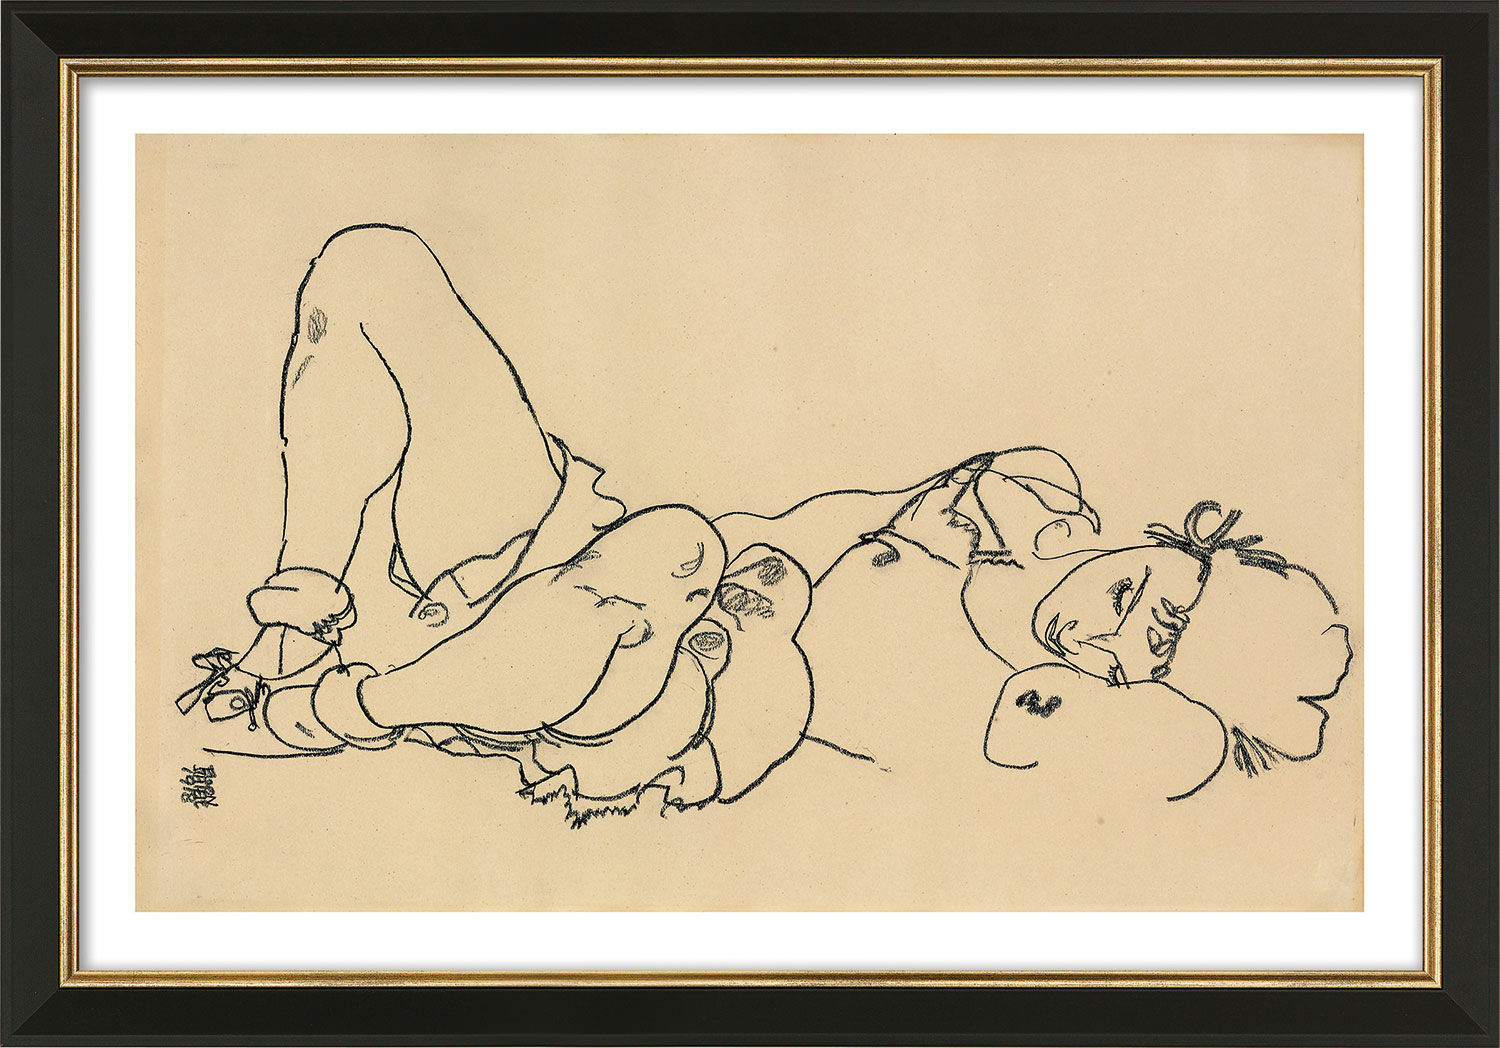 Beeld "Liggende vrouw" (1918), ingelijst von Egon Schiele